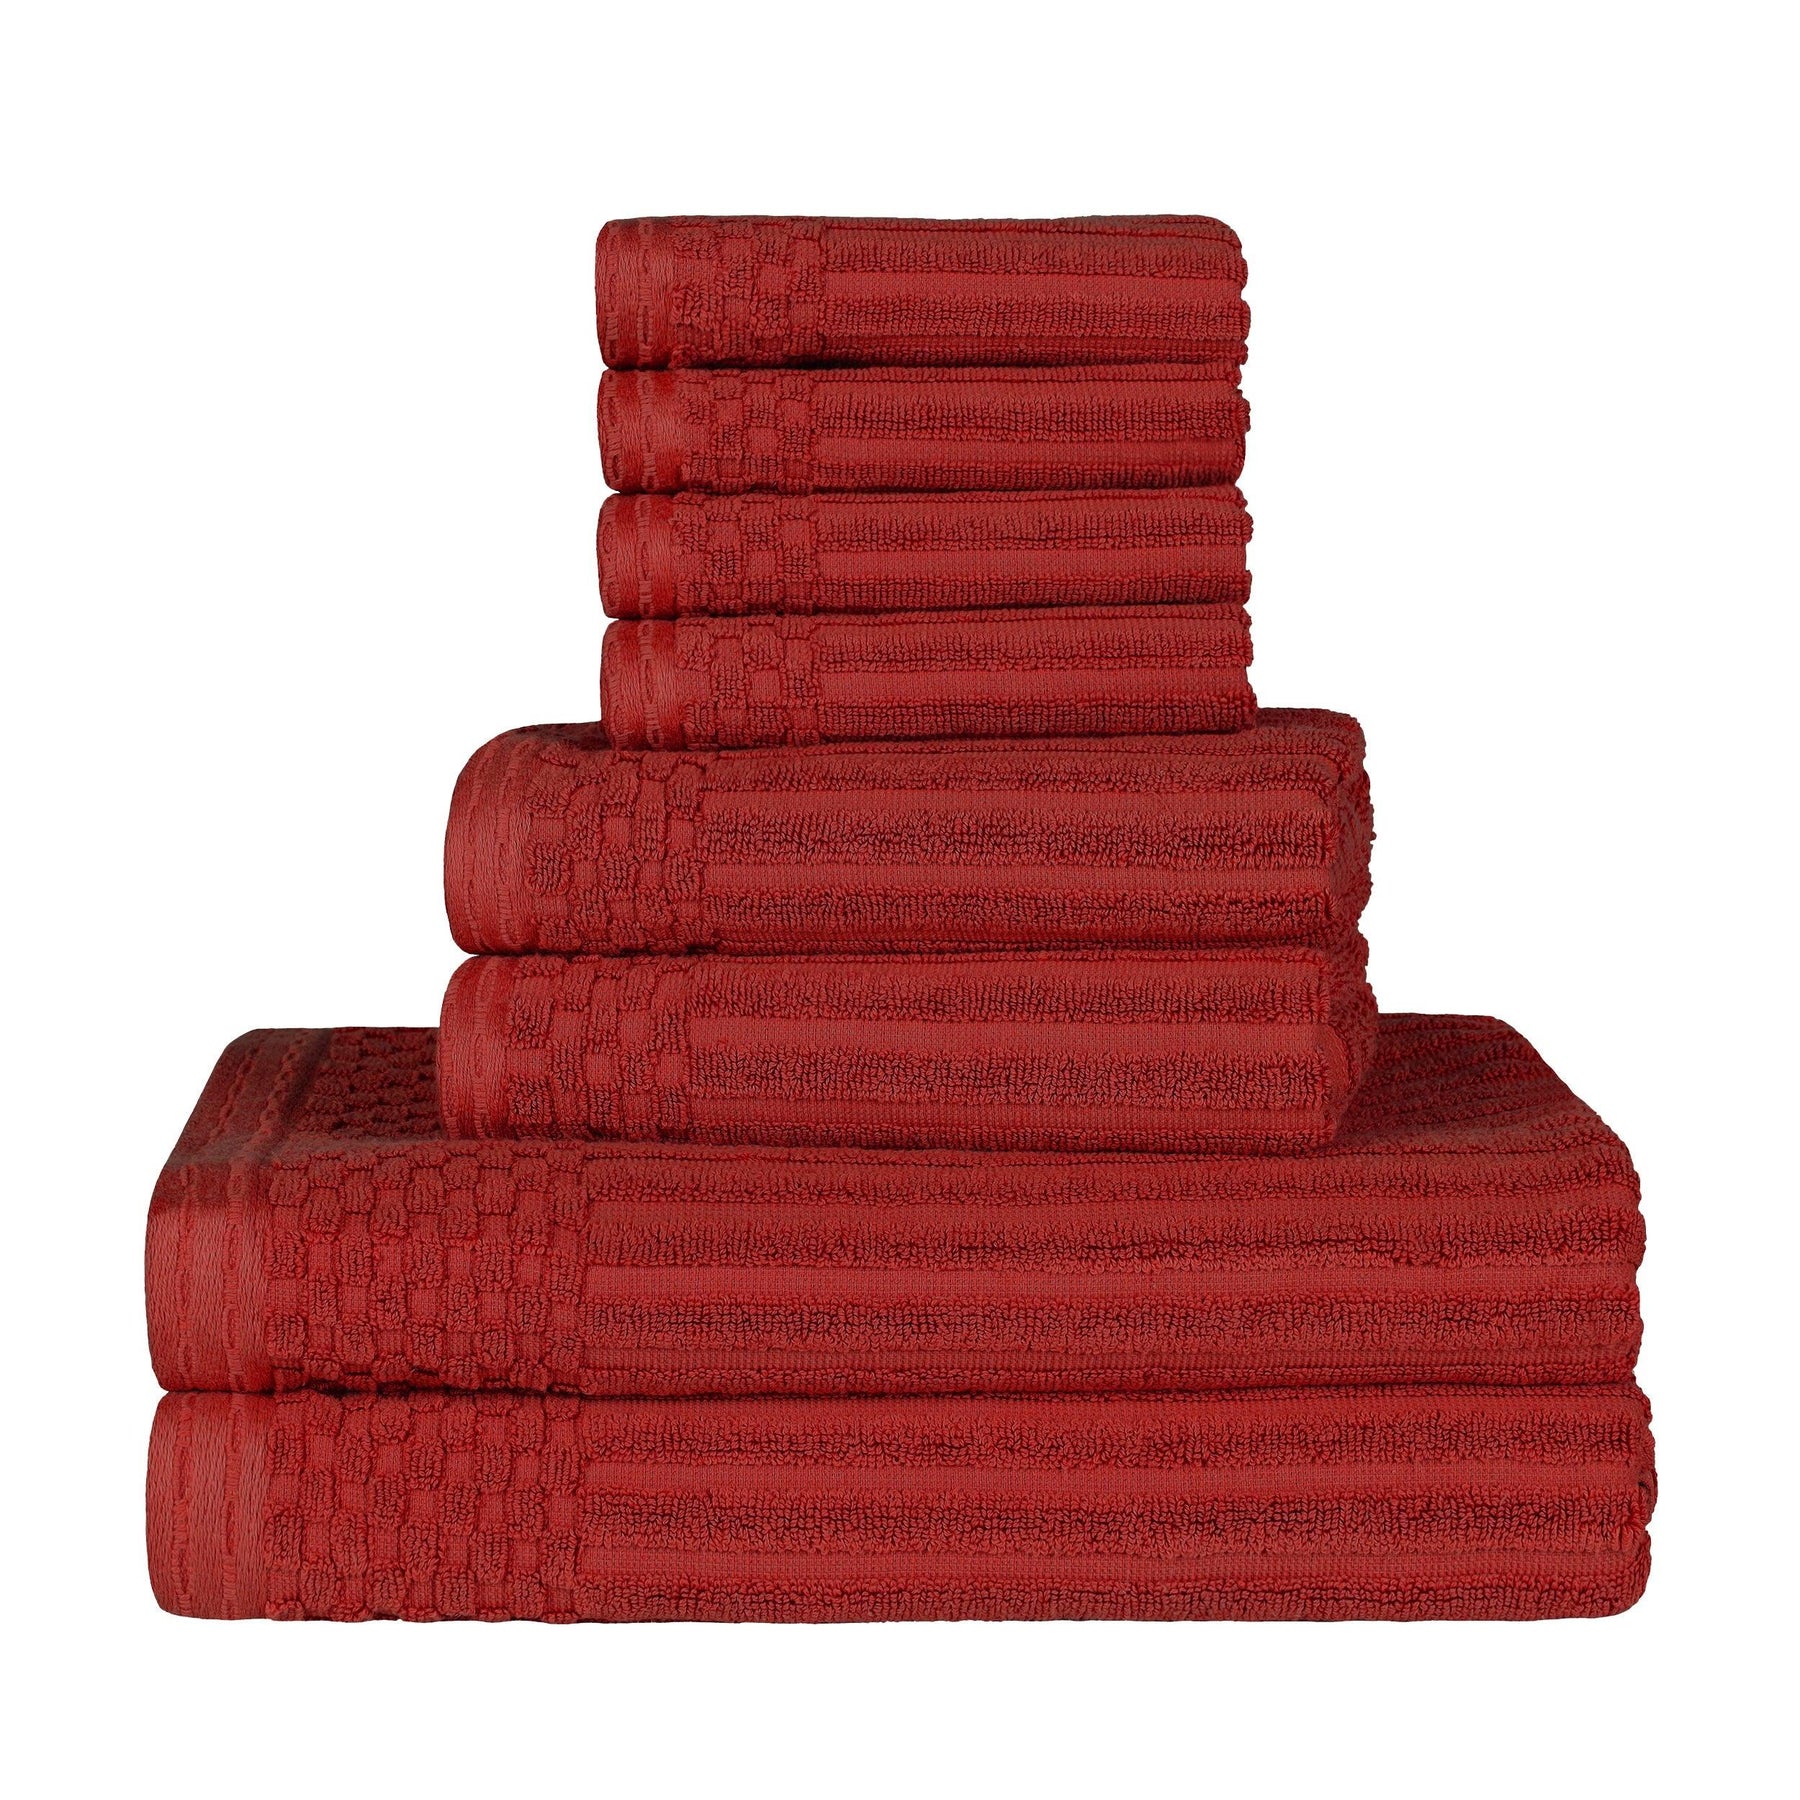 Ribbed Textured Cotton Medium Weight 8 Piece Towel Set - Burgundy